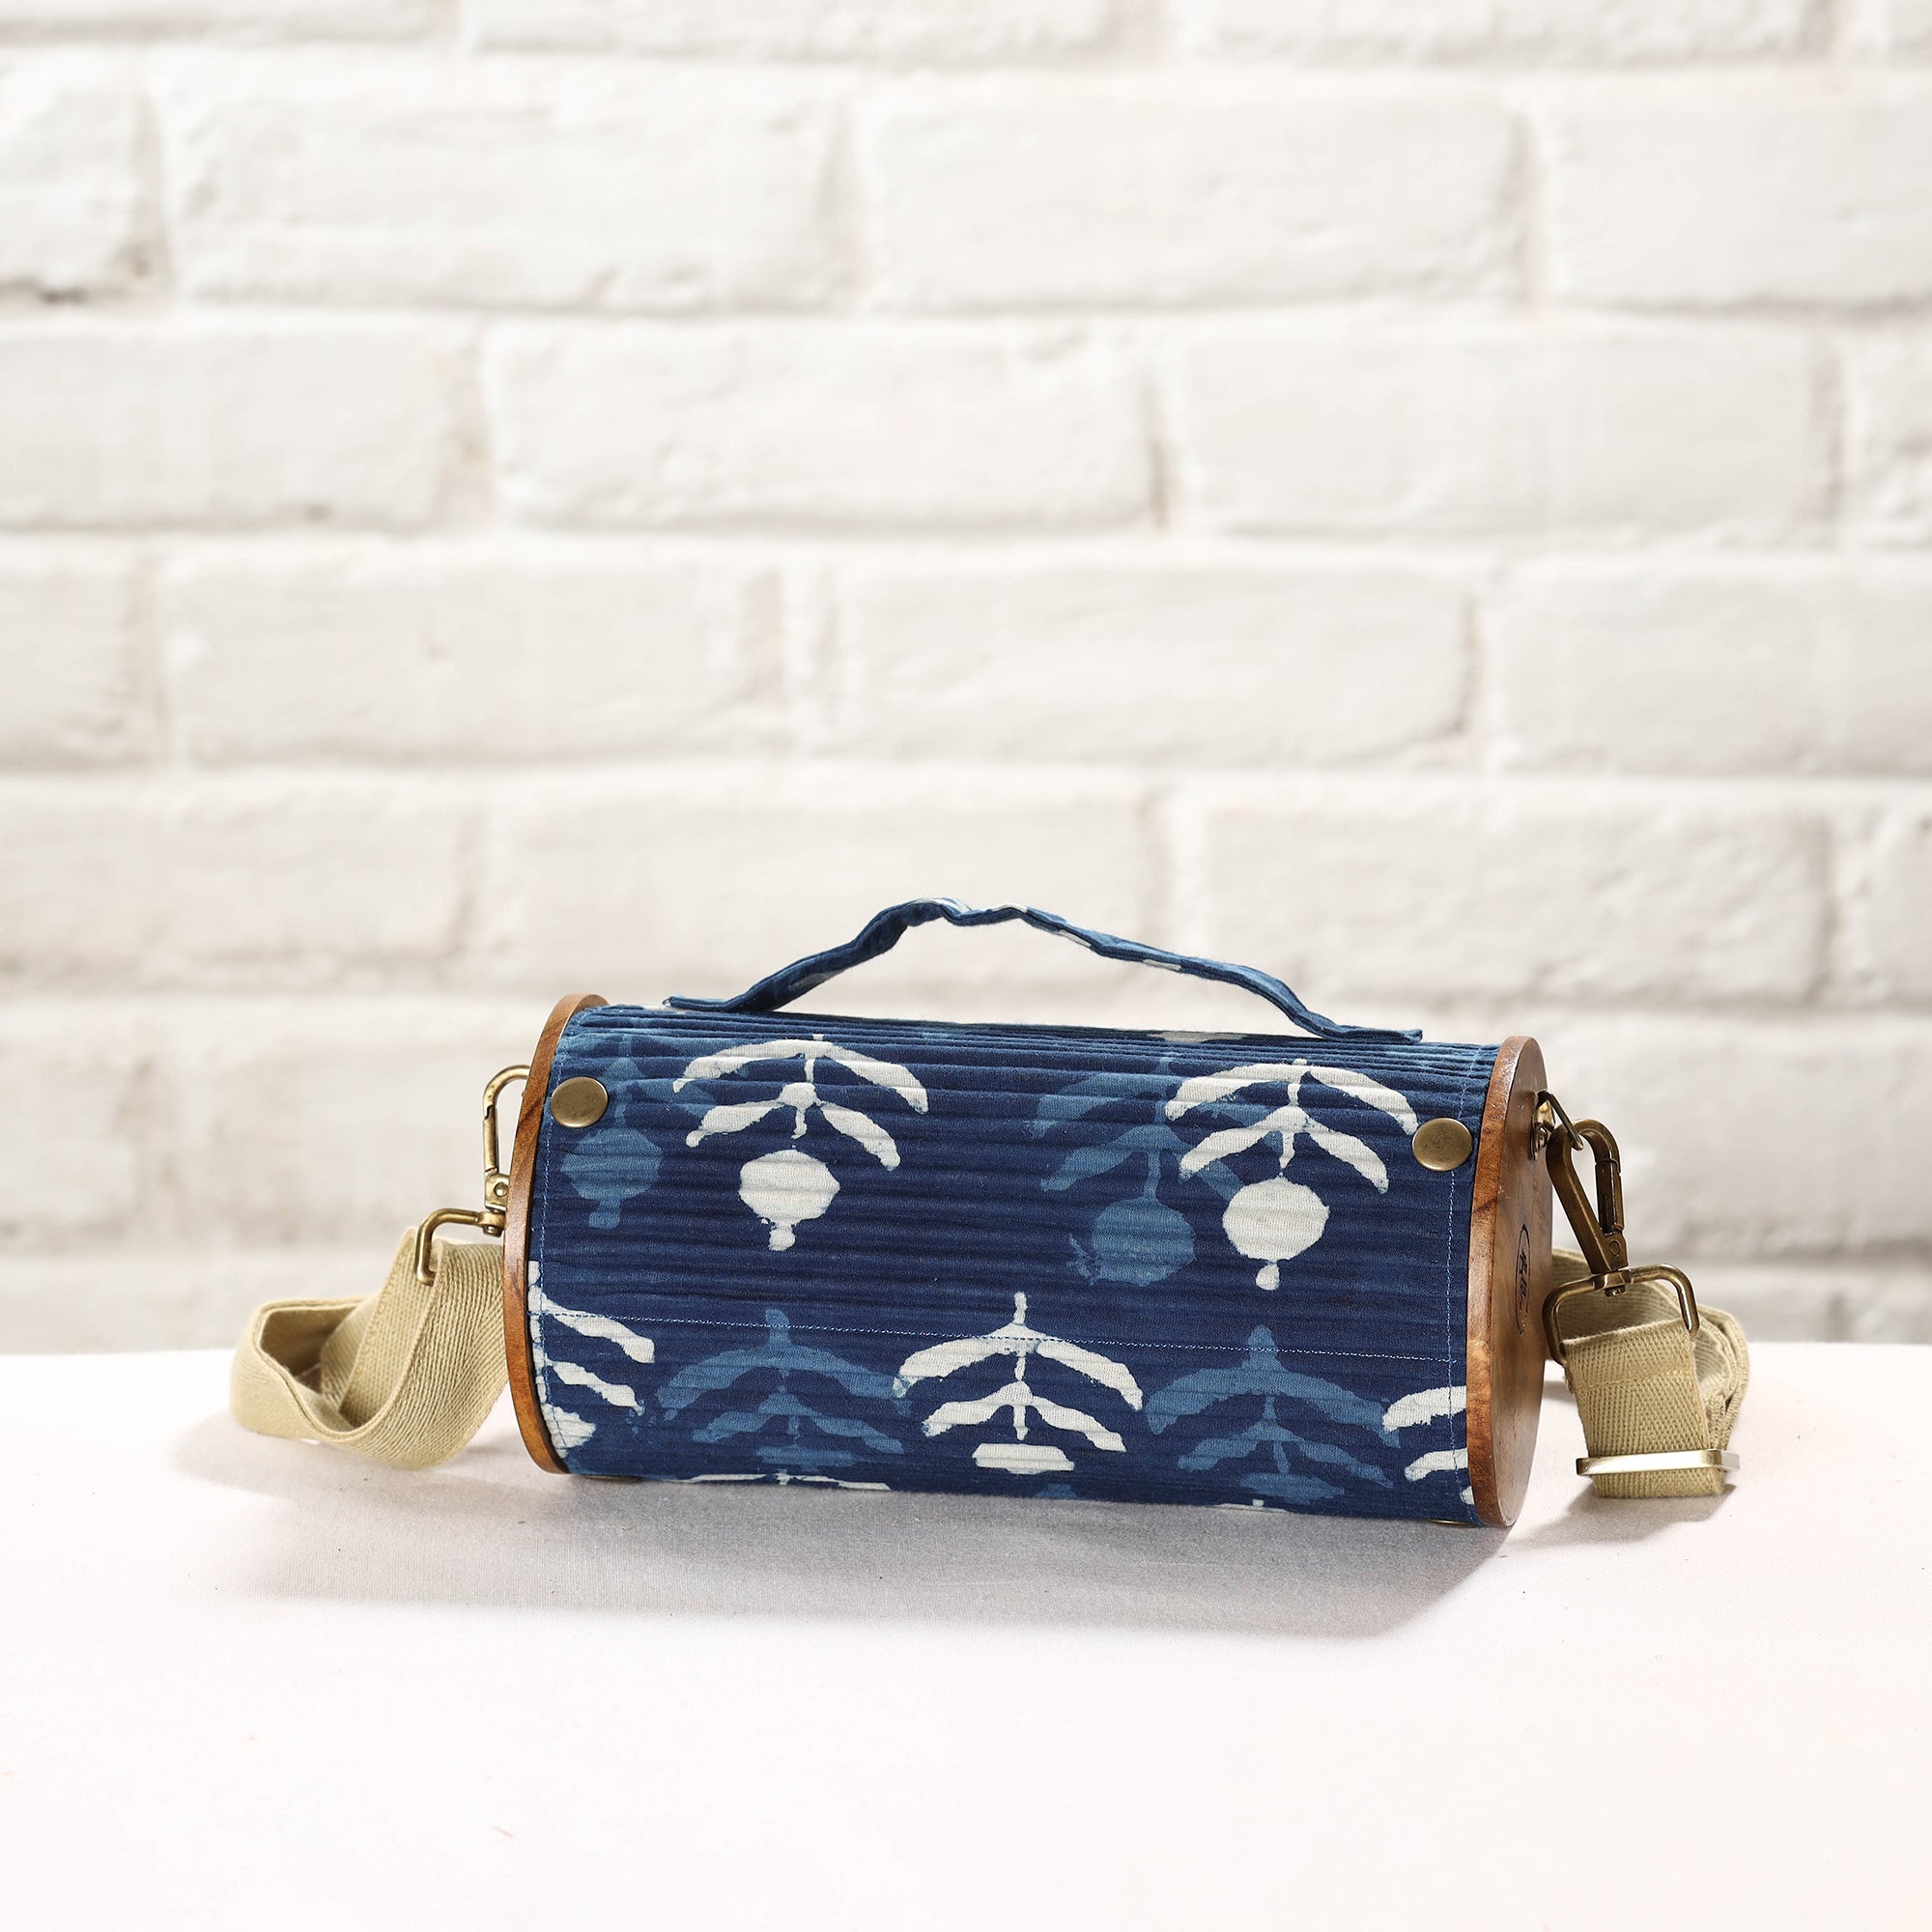 Round Shaped Handbag Handles Wooden DIY Handmade Accessory for Purse Making  | eBay